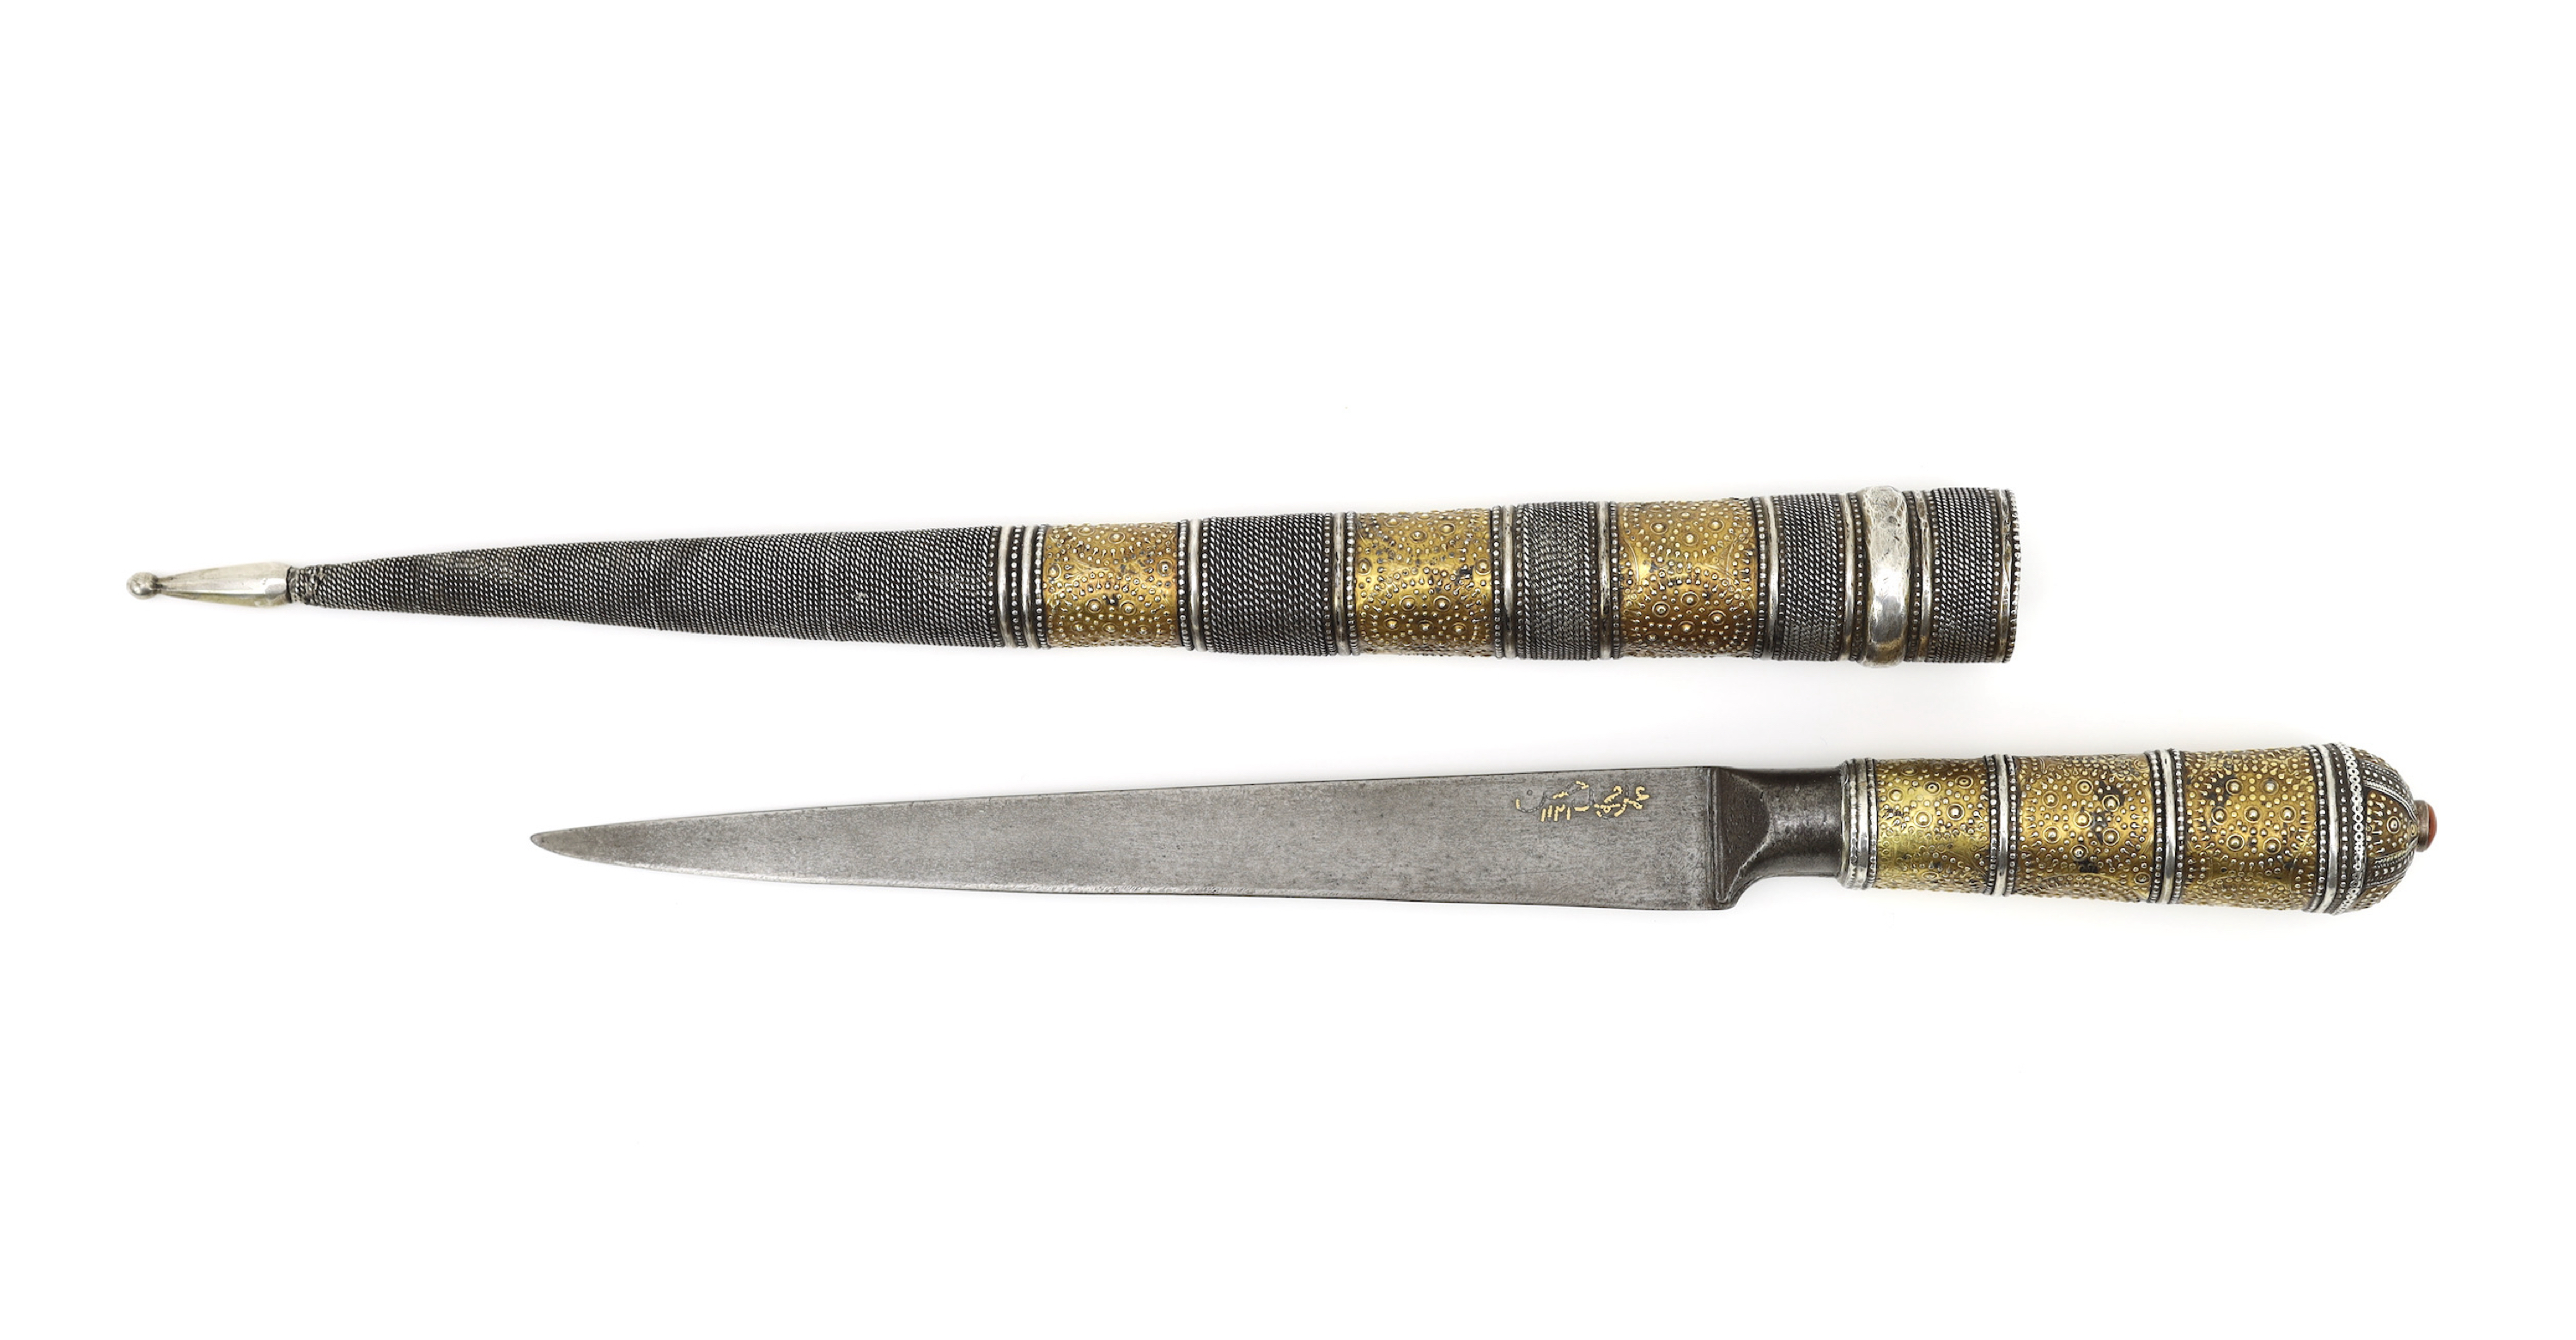 1709 kard dagger overall